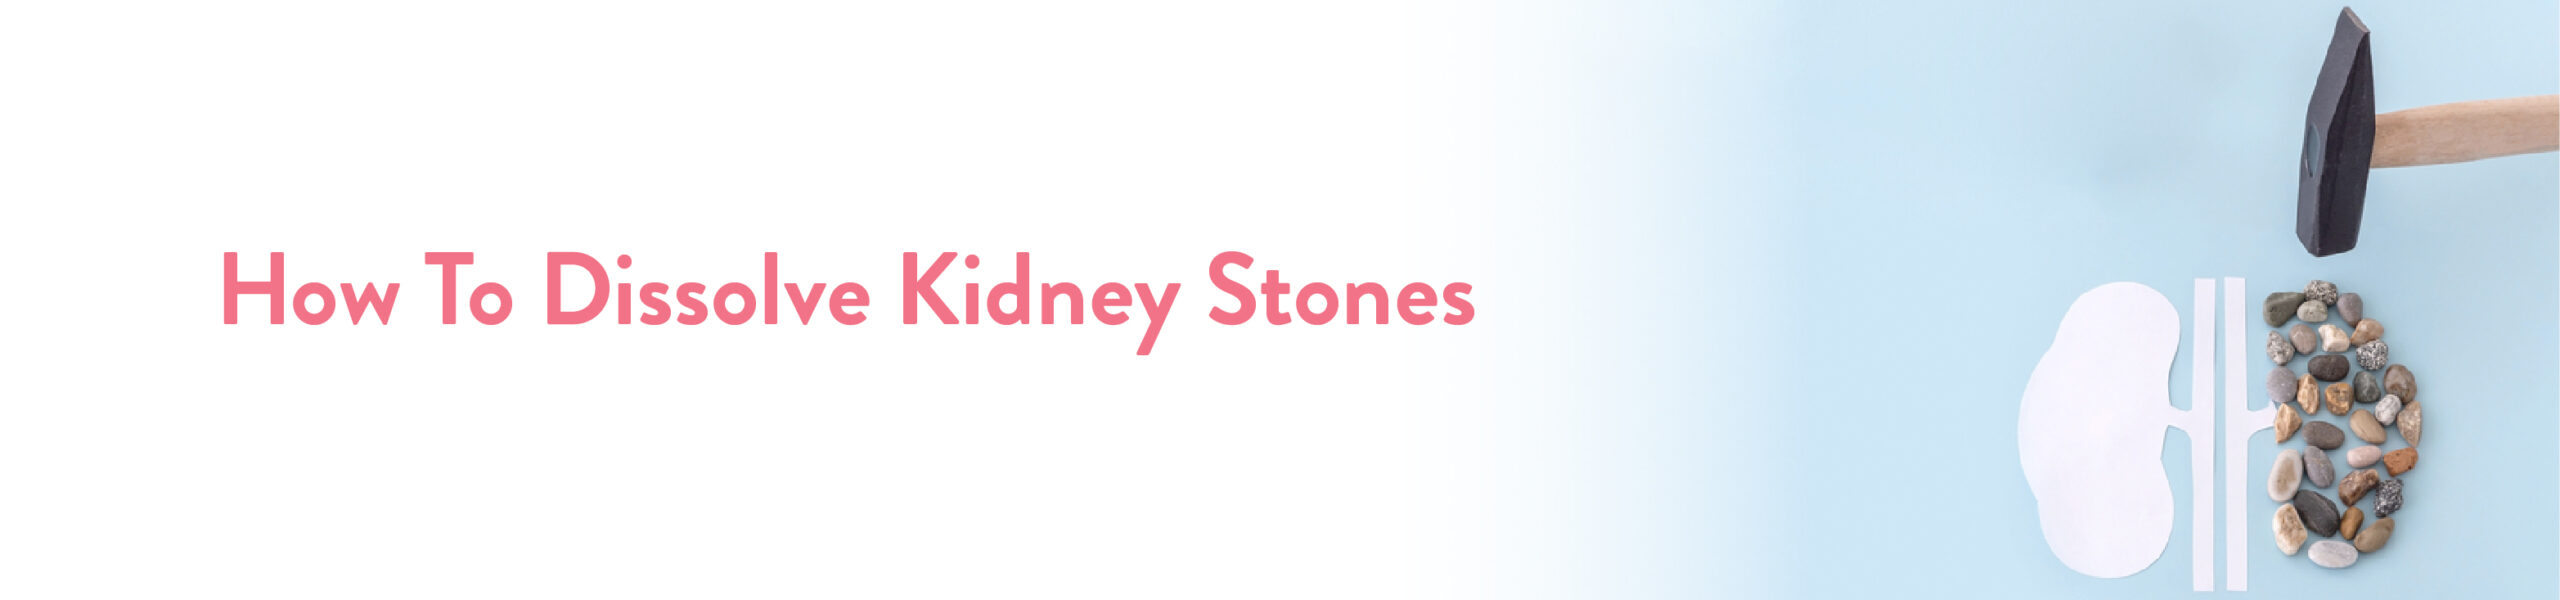 how to dissolve kidney stones banner image